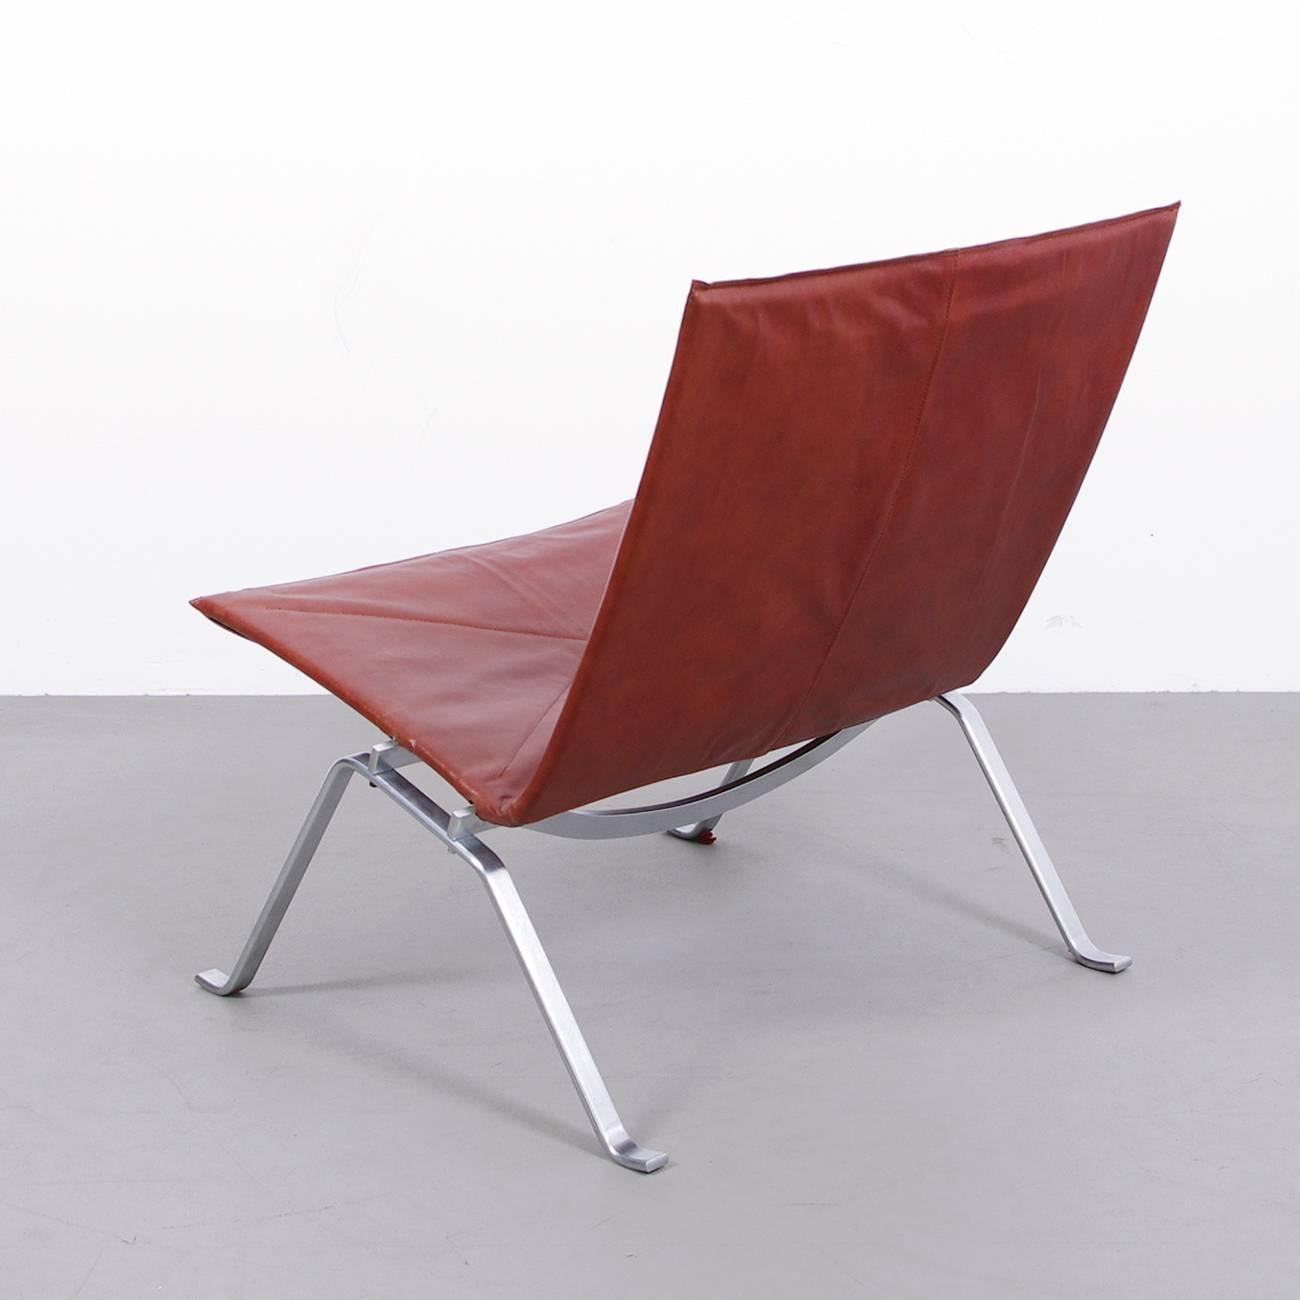 Scandinavian Modern Poul Kjaerholm PK22 Lounge Chair for E Kold Christensen